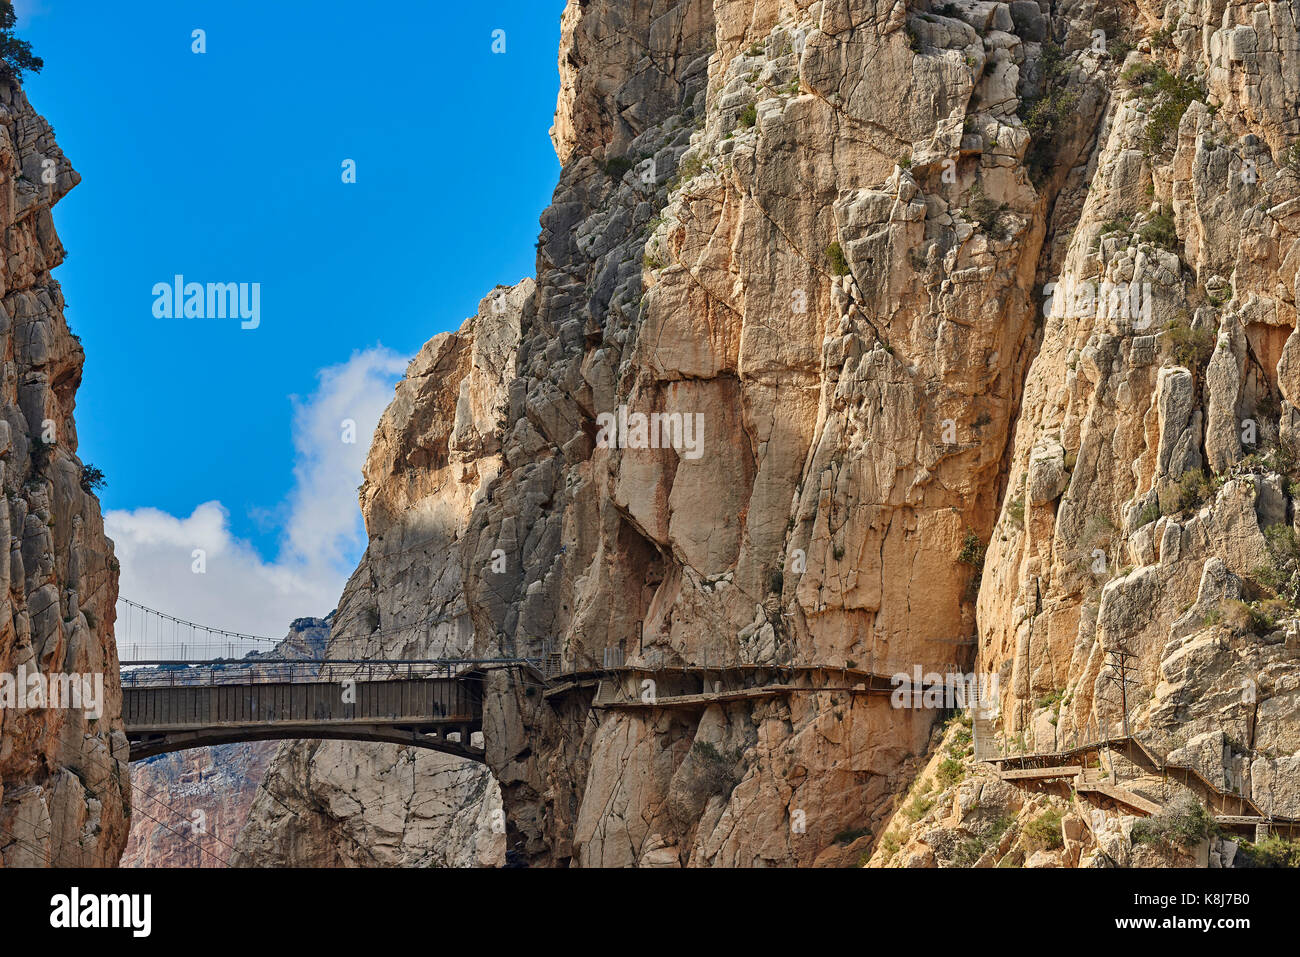 Desfiladero de lo Gaitanes. die Kï¿½ige weg, caminito del Rey, El chorro Schluchten, Perugia, Provinz Malaga, Andalusien, Spanien Stockfoto